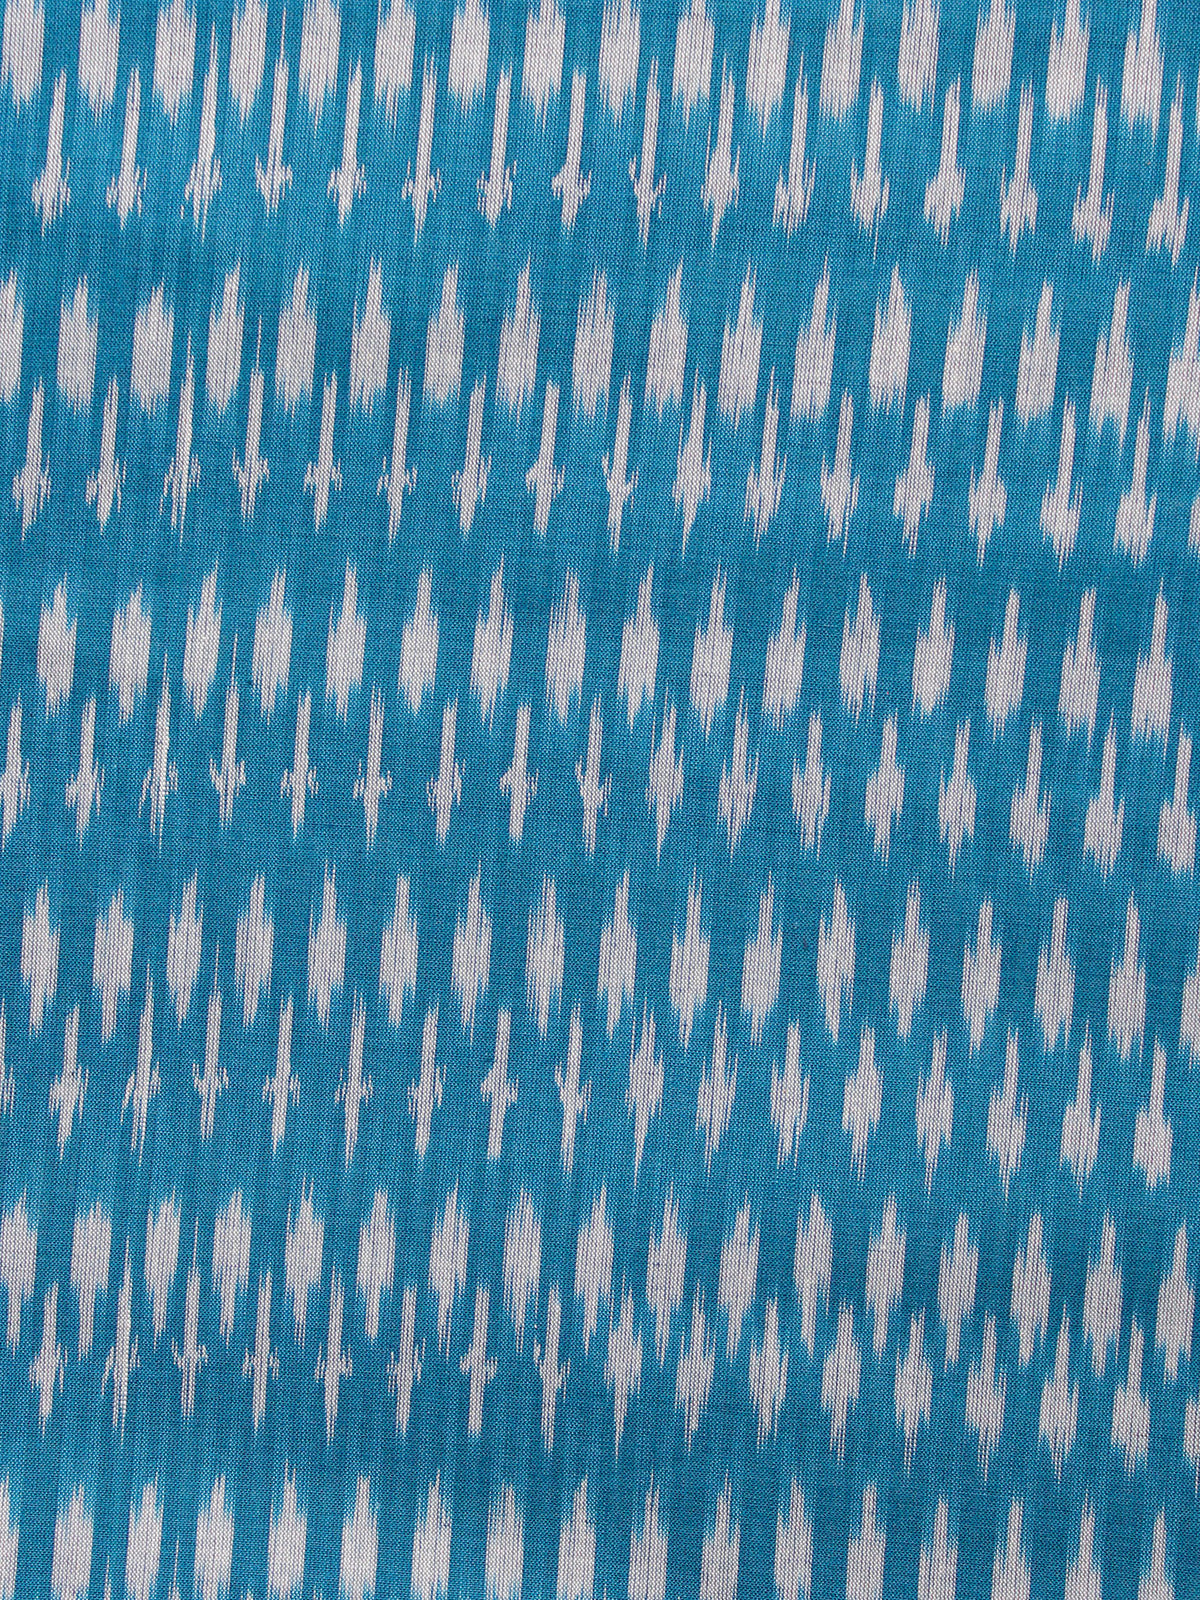 Teal Blue Grey Hand Weaved Ikat Mercerised Fabric Per Meter - F002F1438